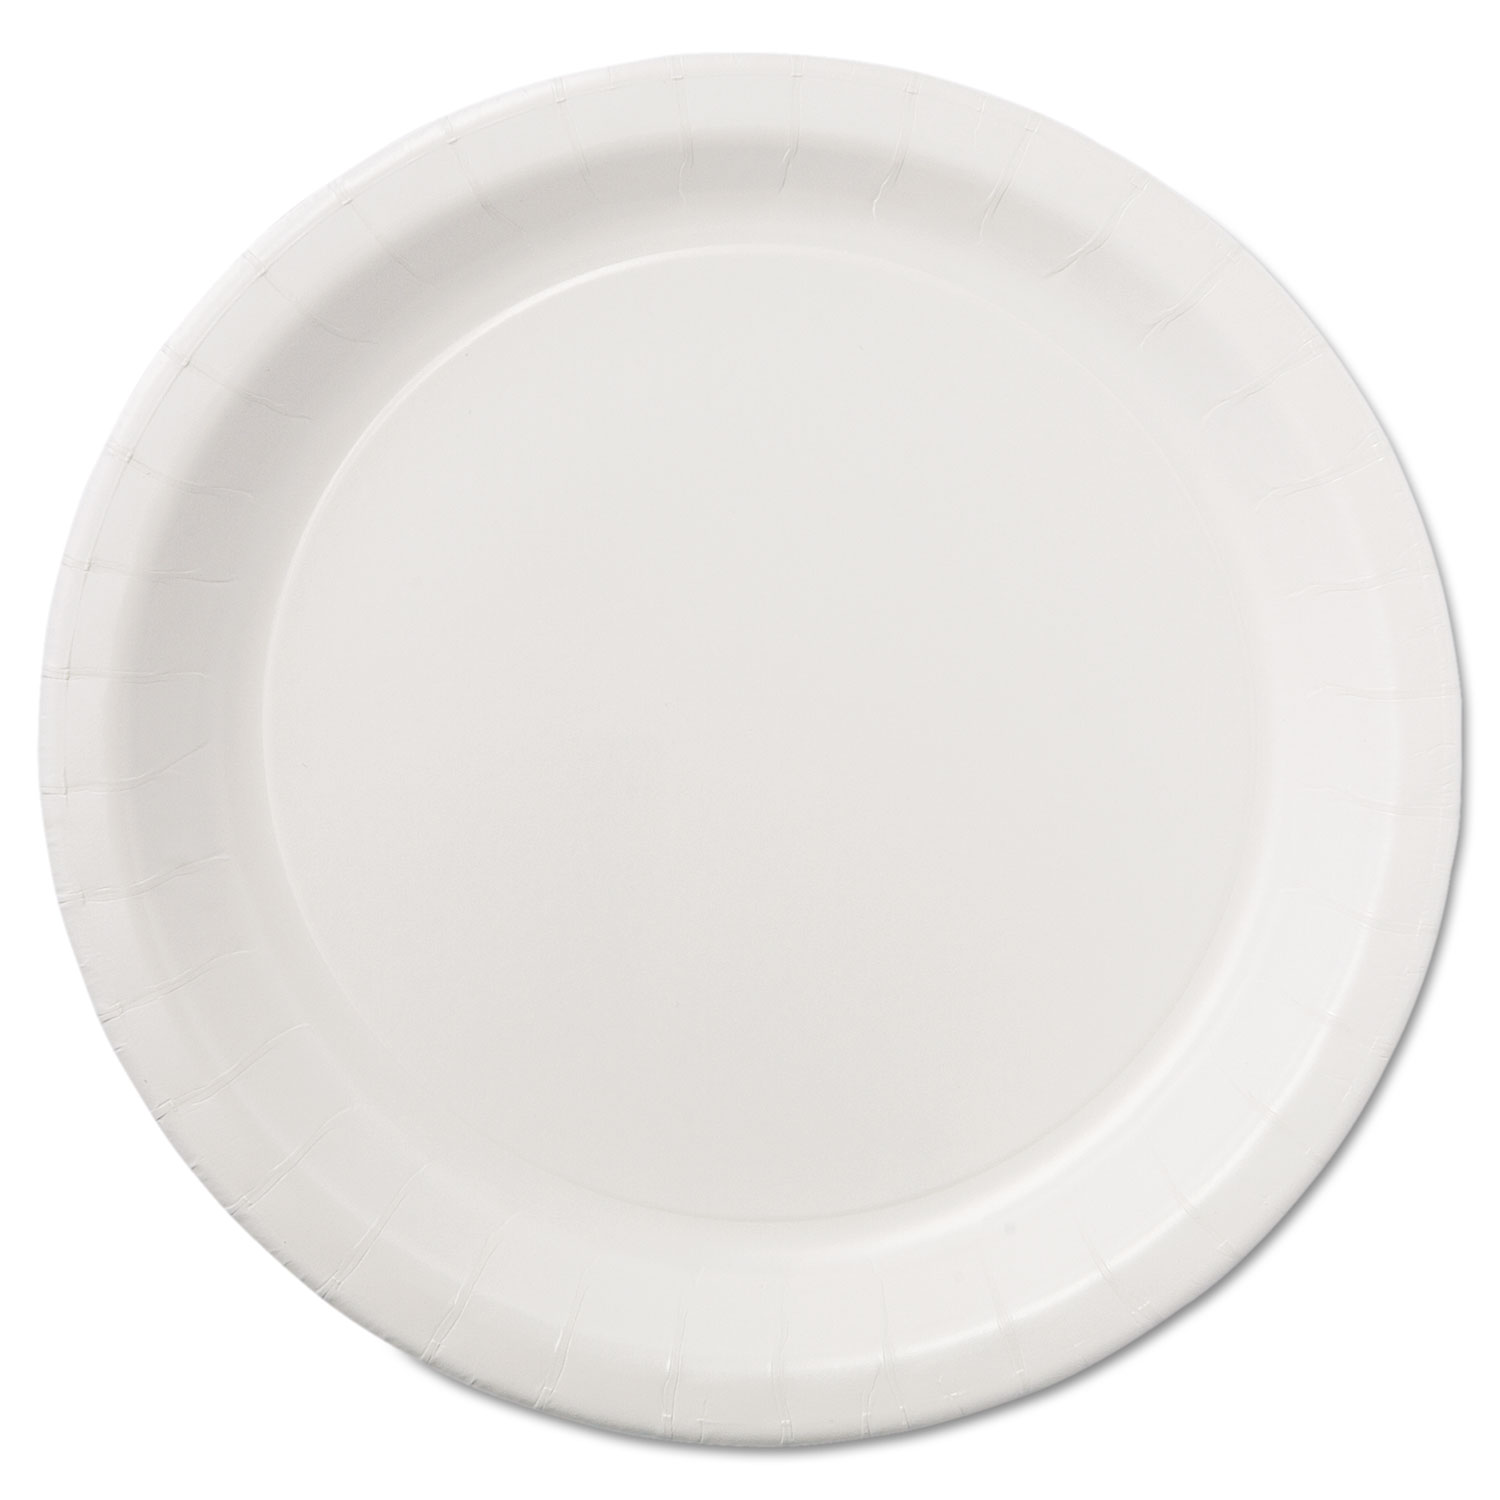  Hoffmaster PL7095 Coated Paper Dinnerware, Plate, 9, White, 50/Pack, 10 Packs/Carton (HFMPL7095) 